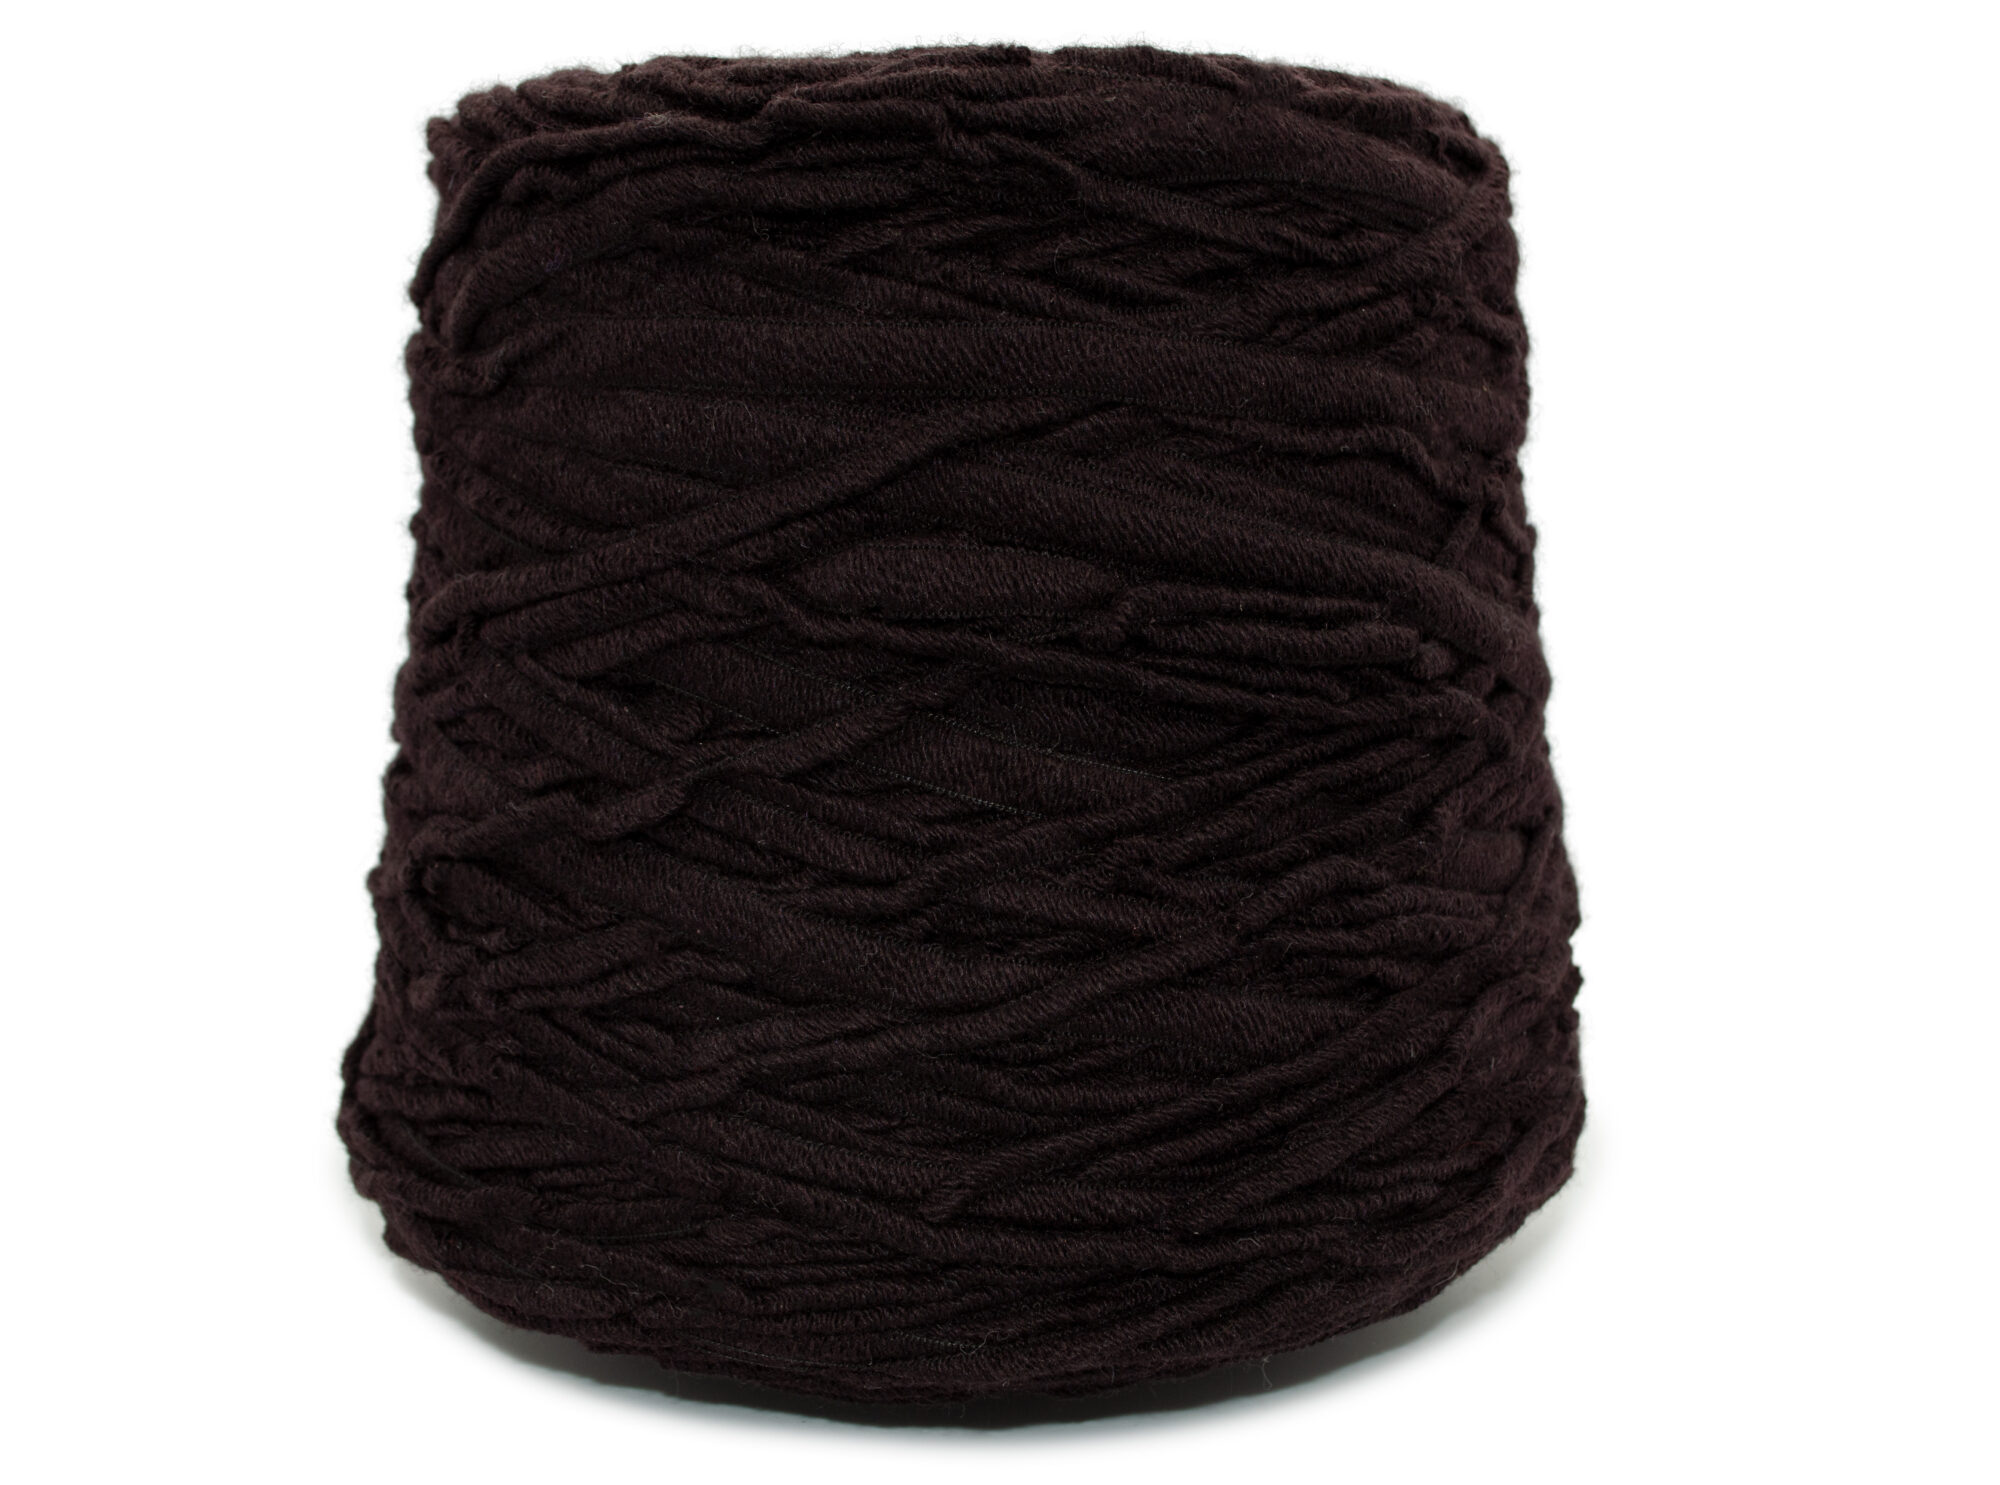 90% Cashmere wool, 10% Polyamide - Wooly Yarn